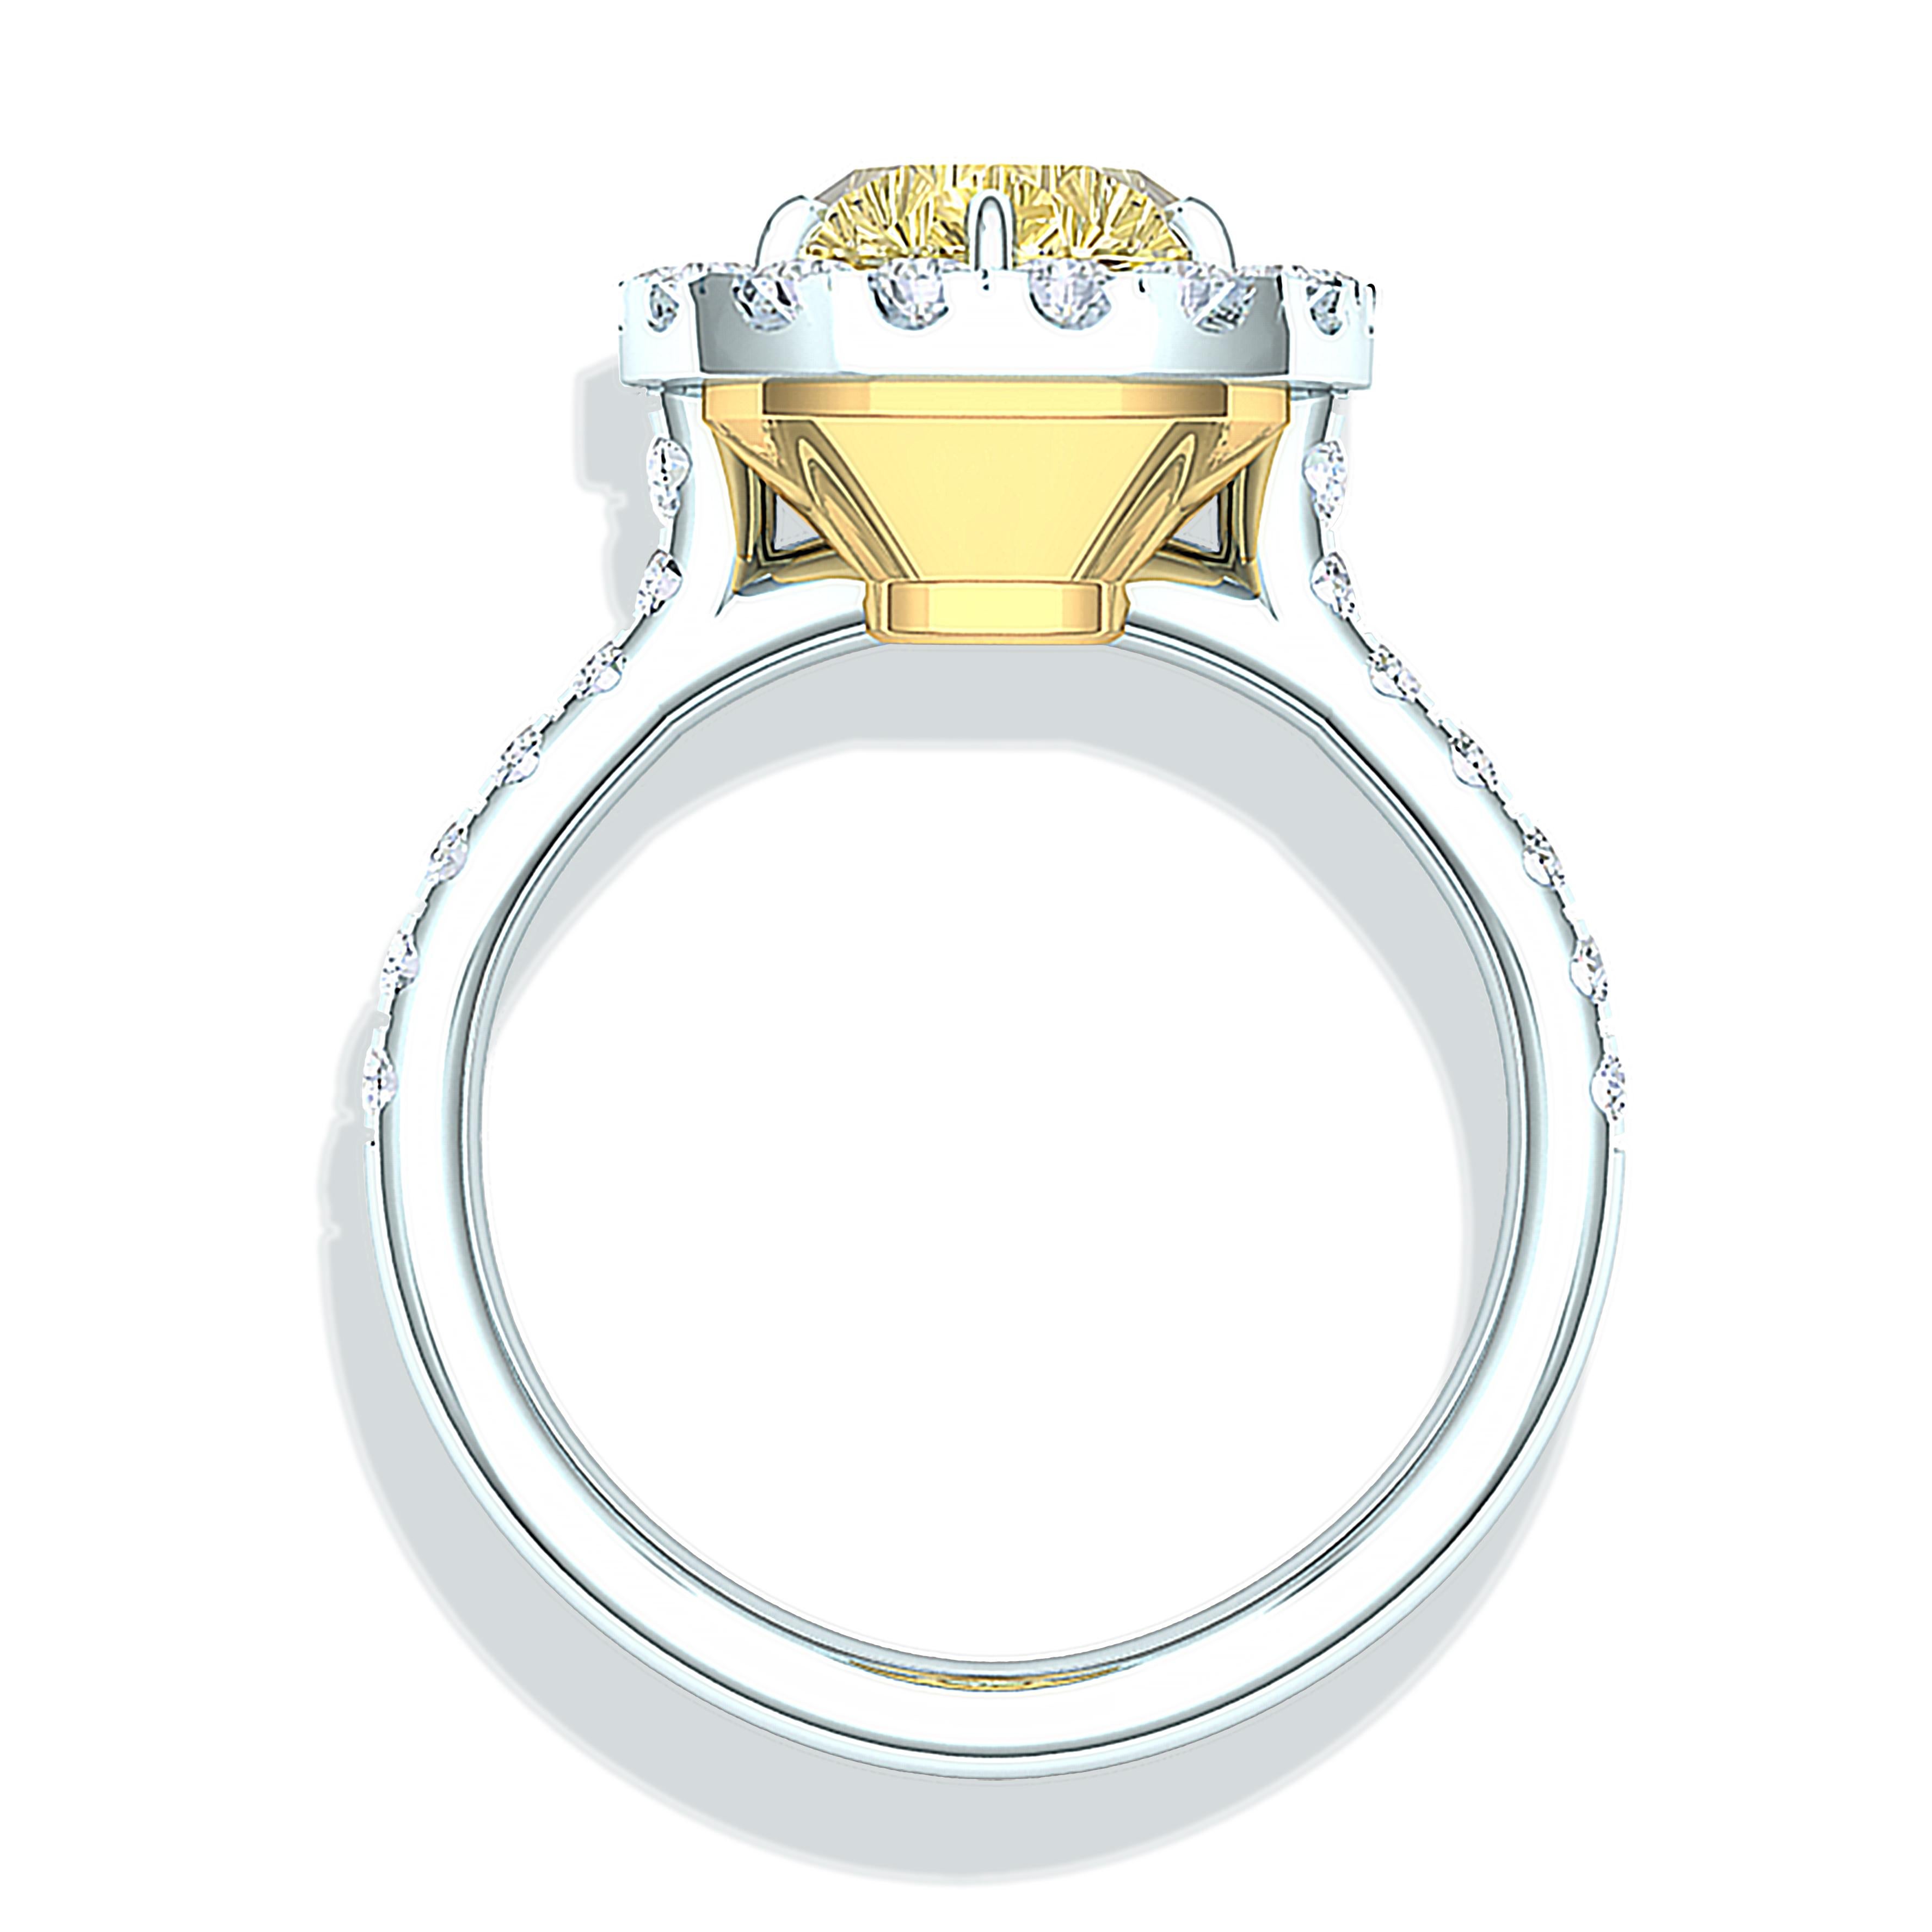 2 carat pear shaped diamond ring on hand